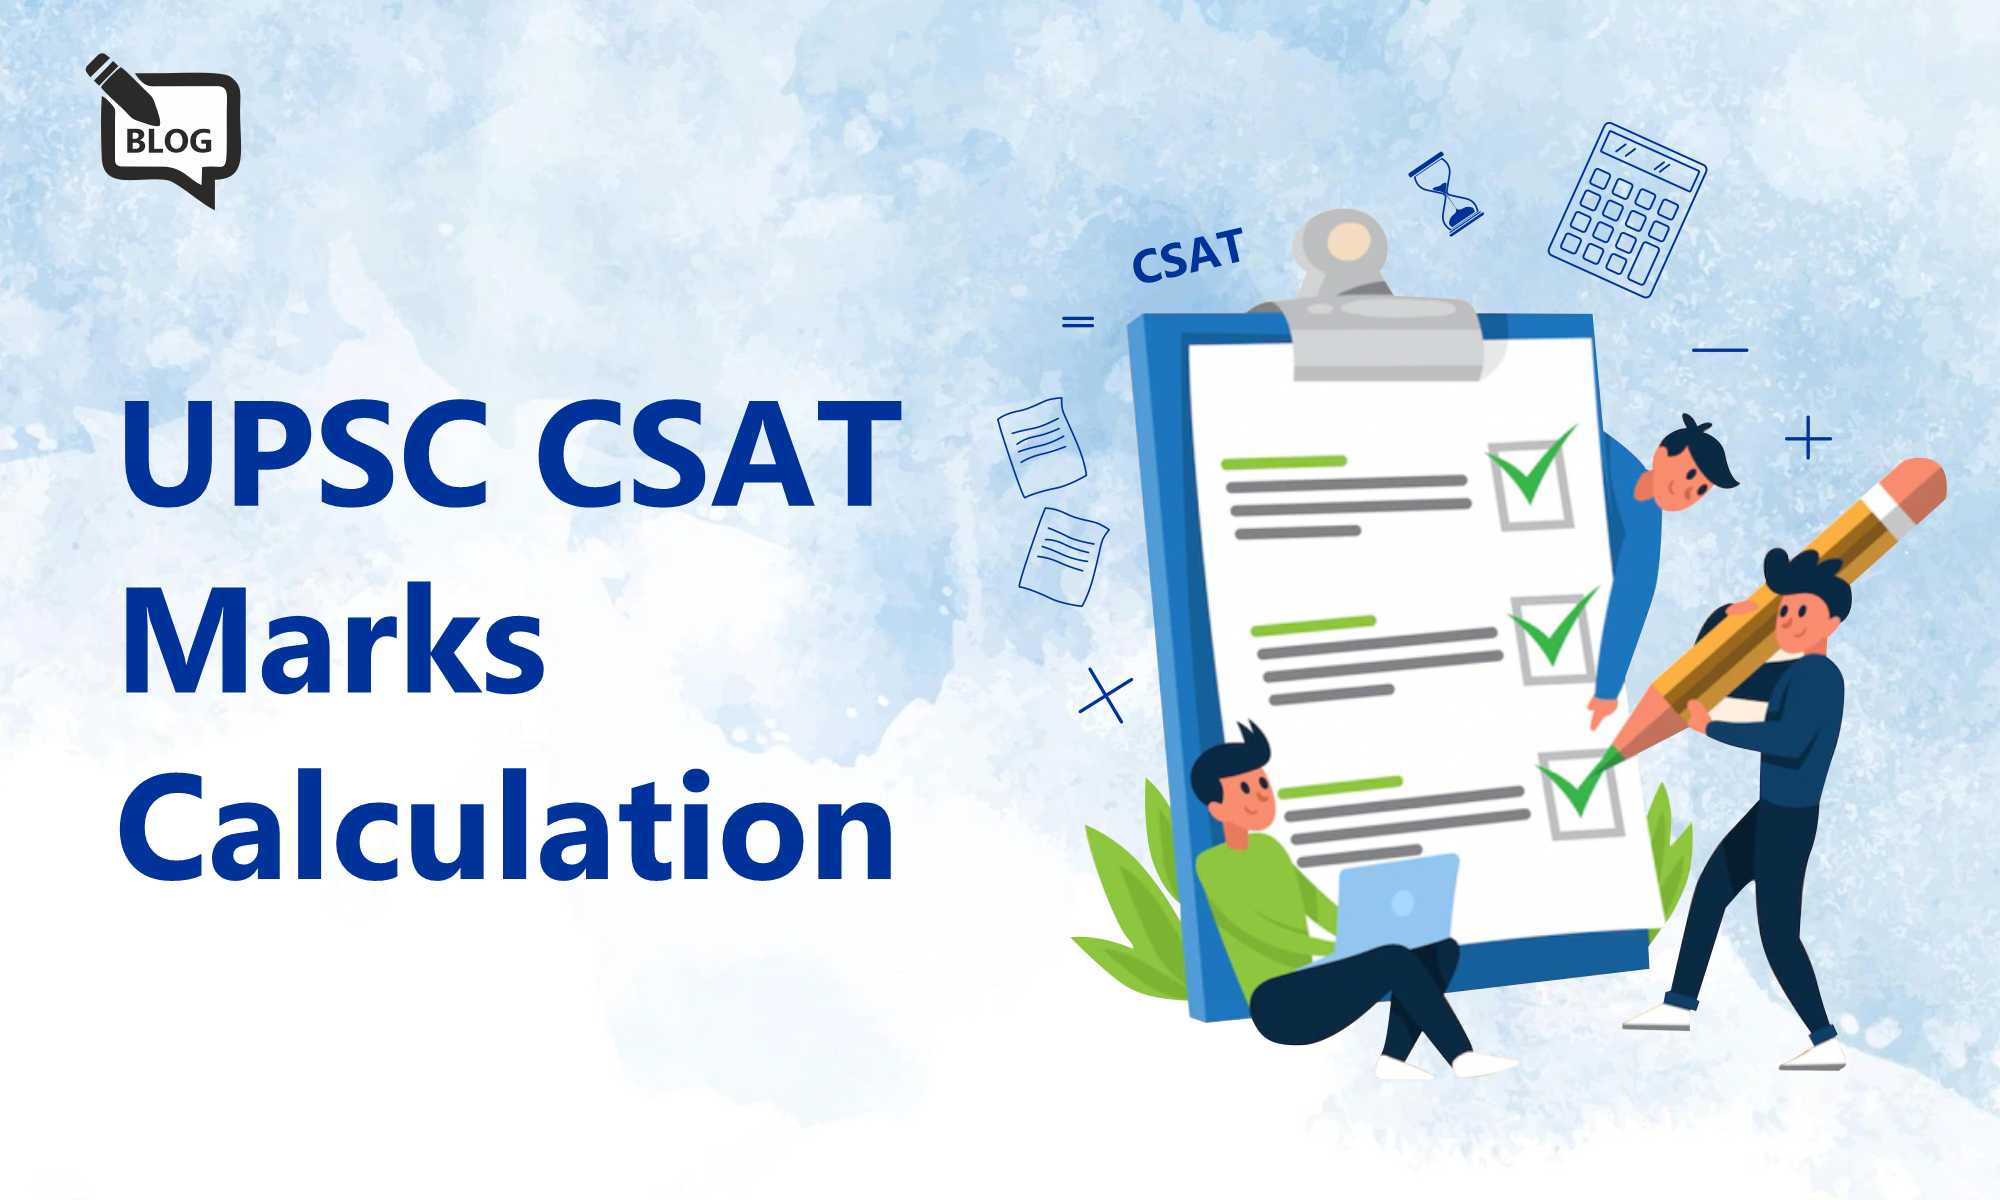 UPSC CSAT Marks Calculation